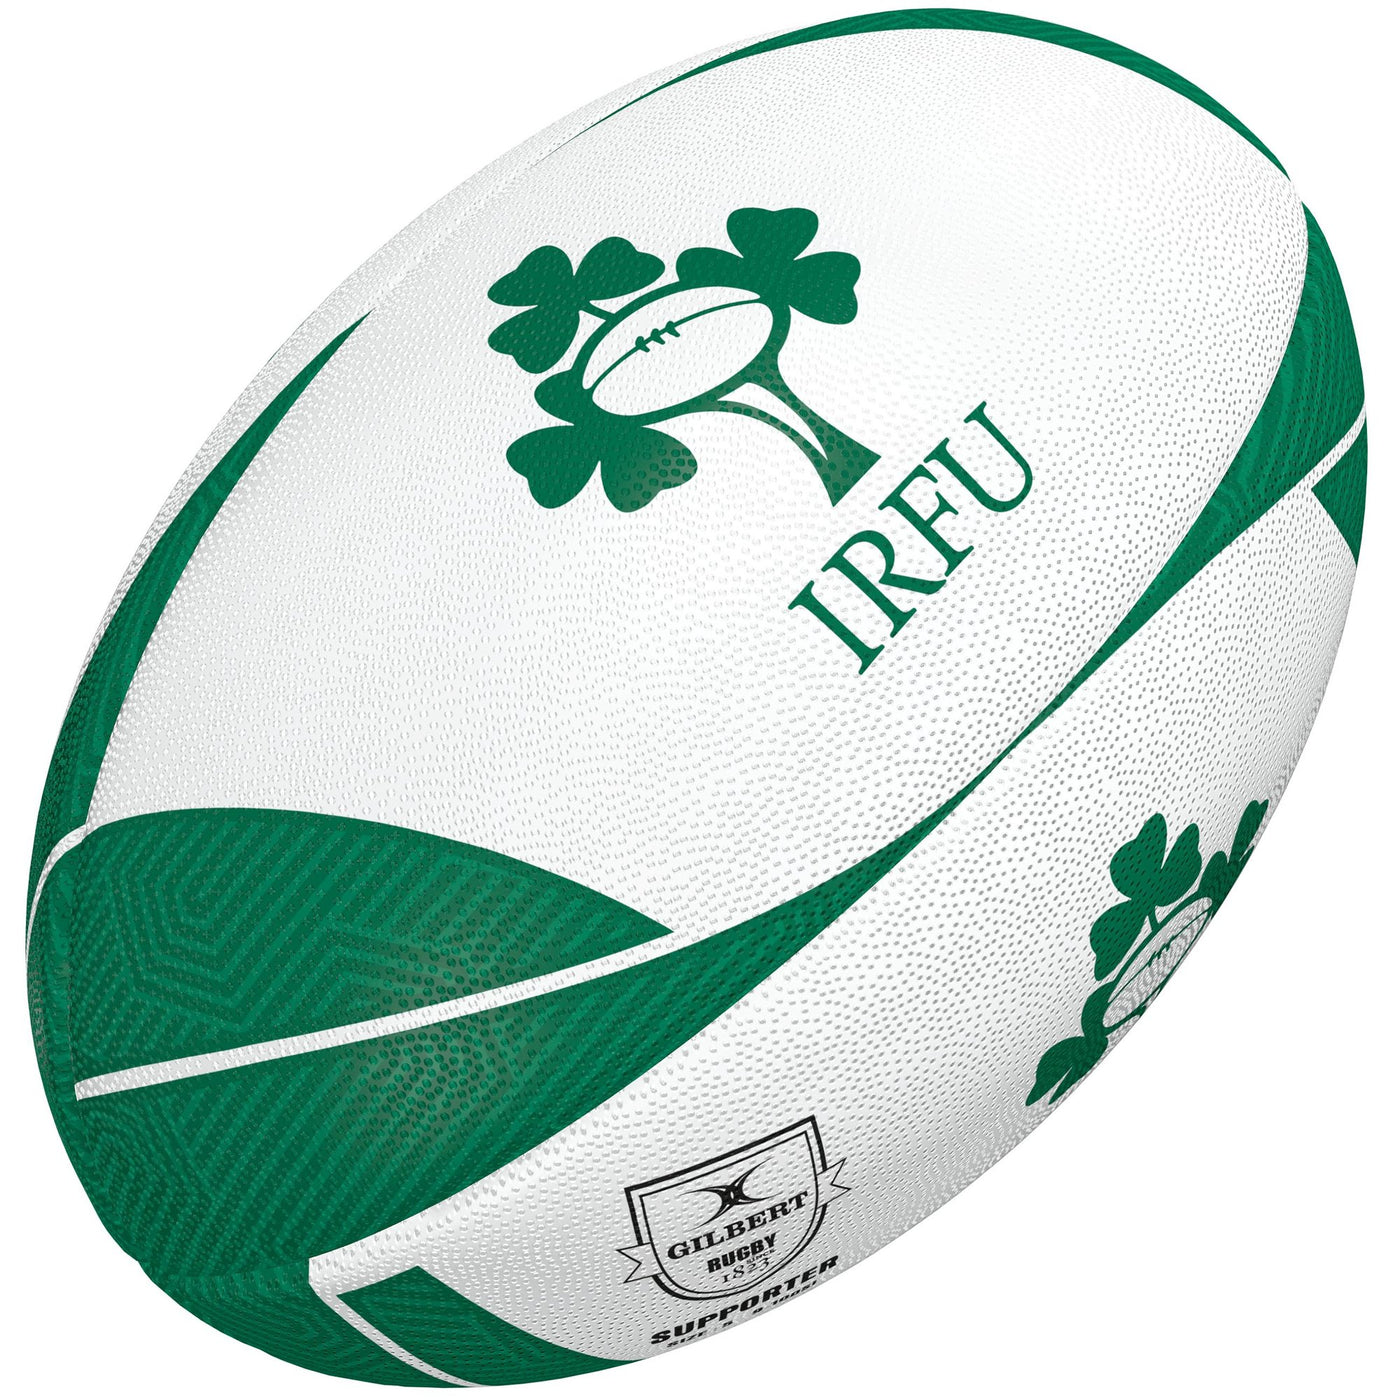 Ierland Rugbybal Supporter Maat 4